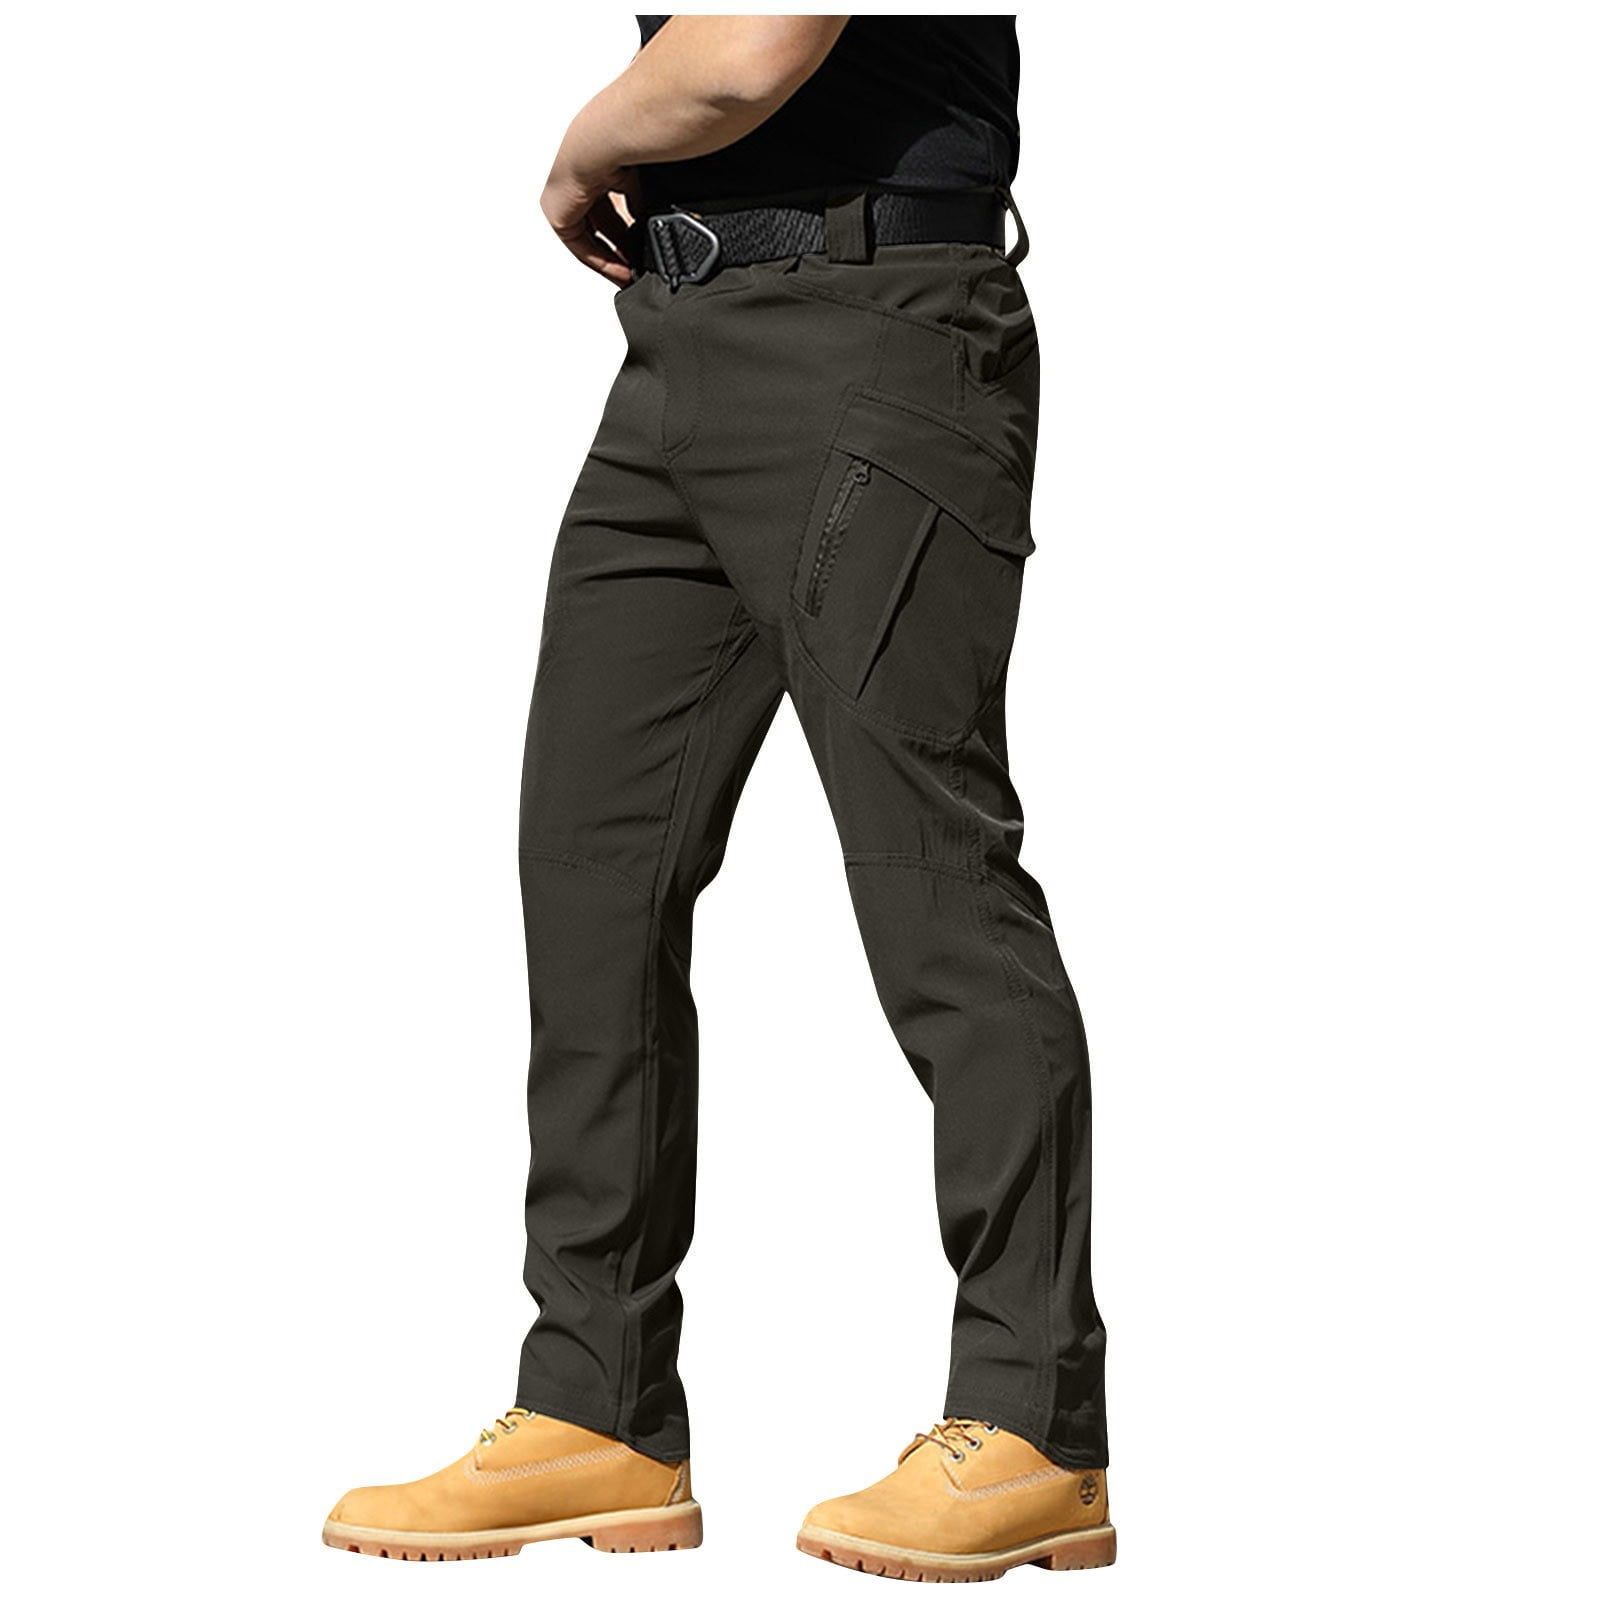 Cuhas Cargo Pants for Men Fall Autumn Winter Pants Elastic Fabric Ix9 ...